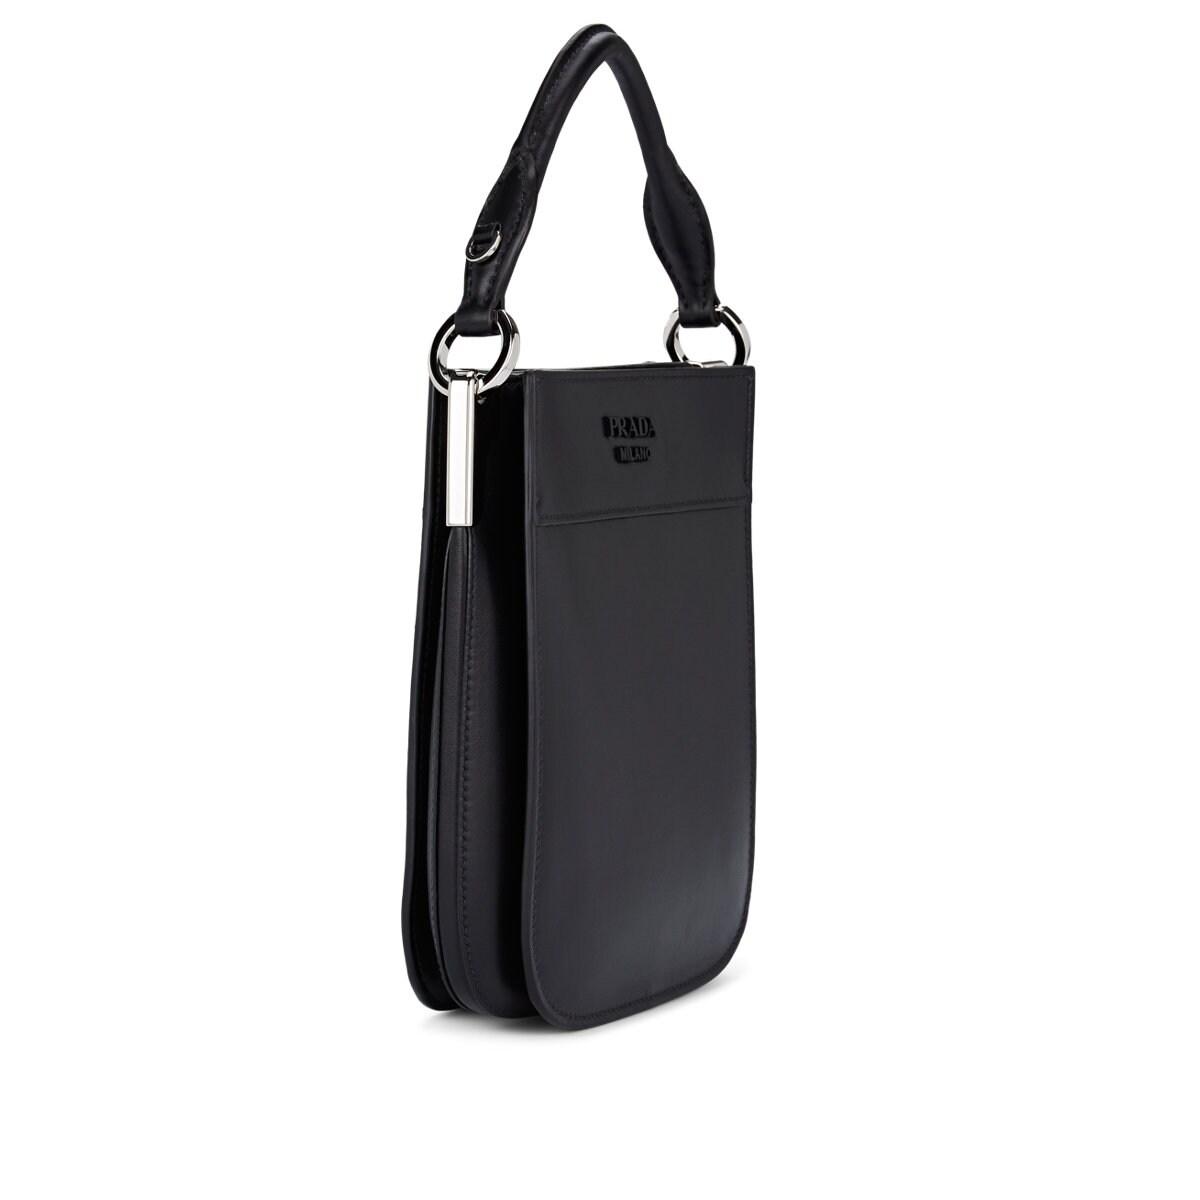 Prada Margit Small Leather Bucket Bag in Black - Lyst